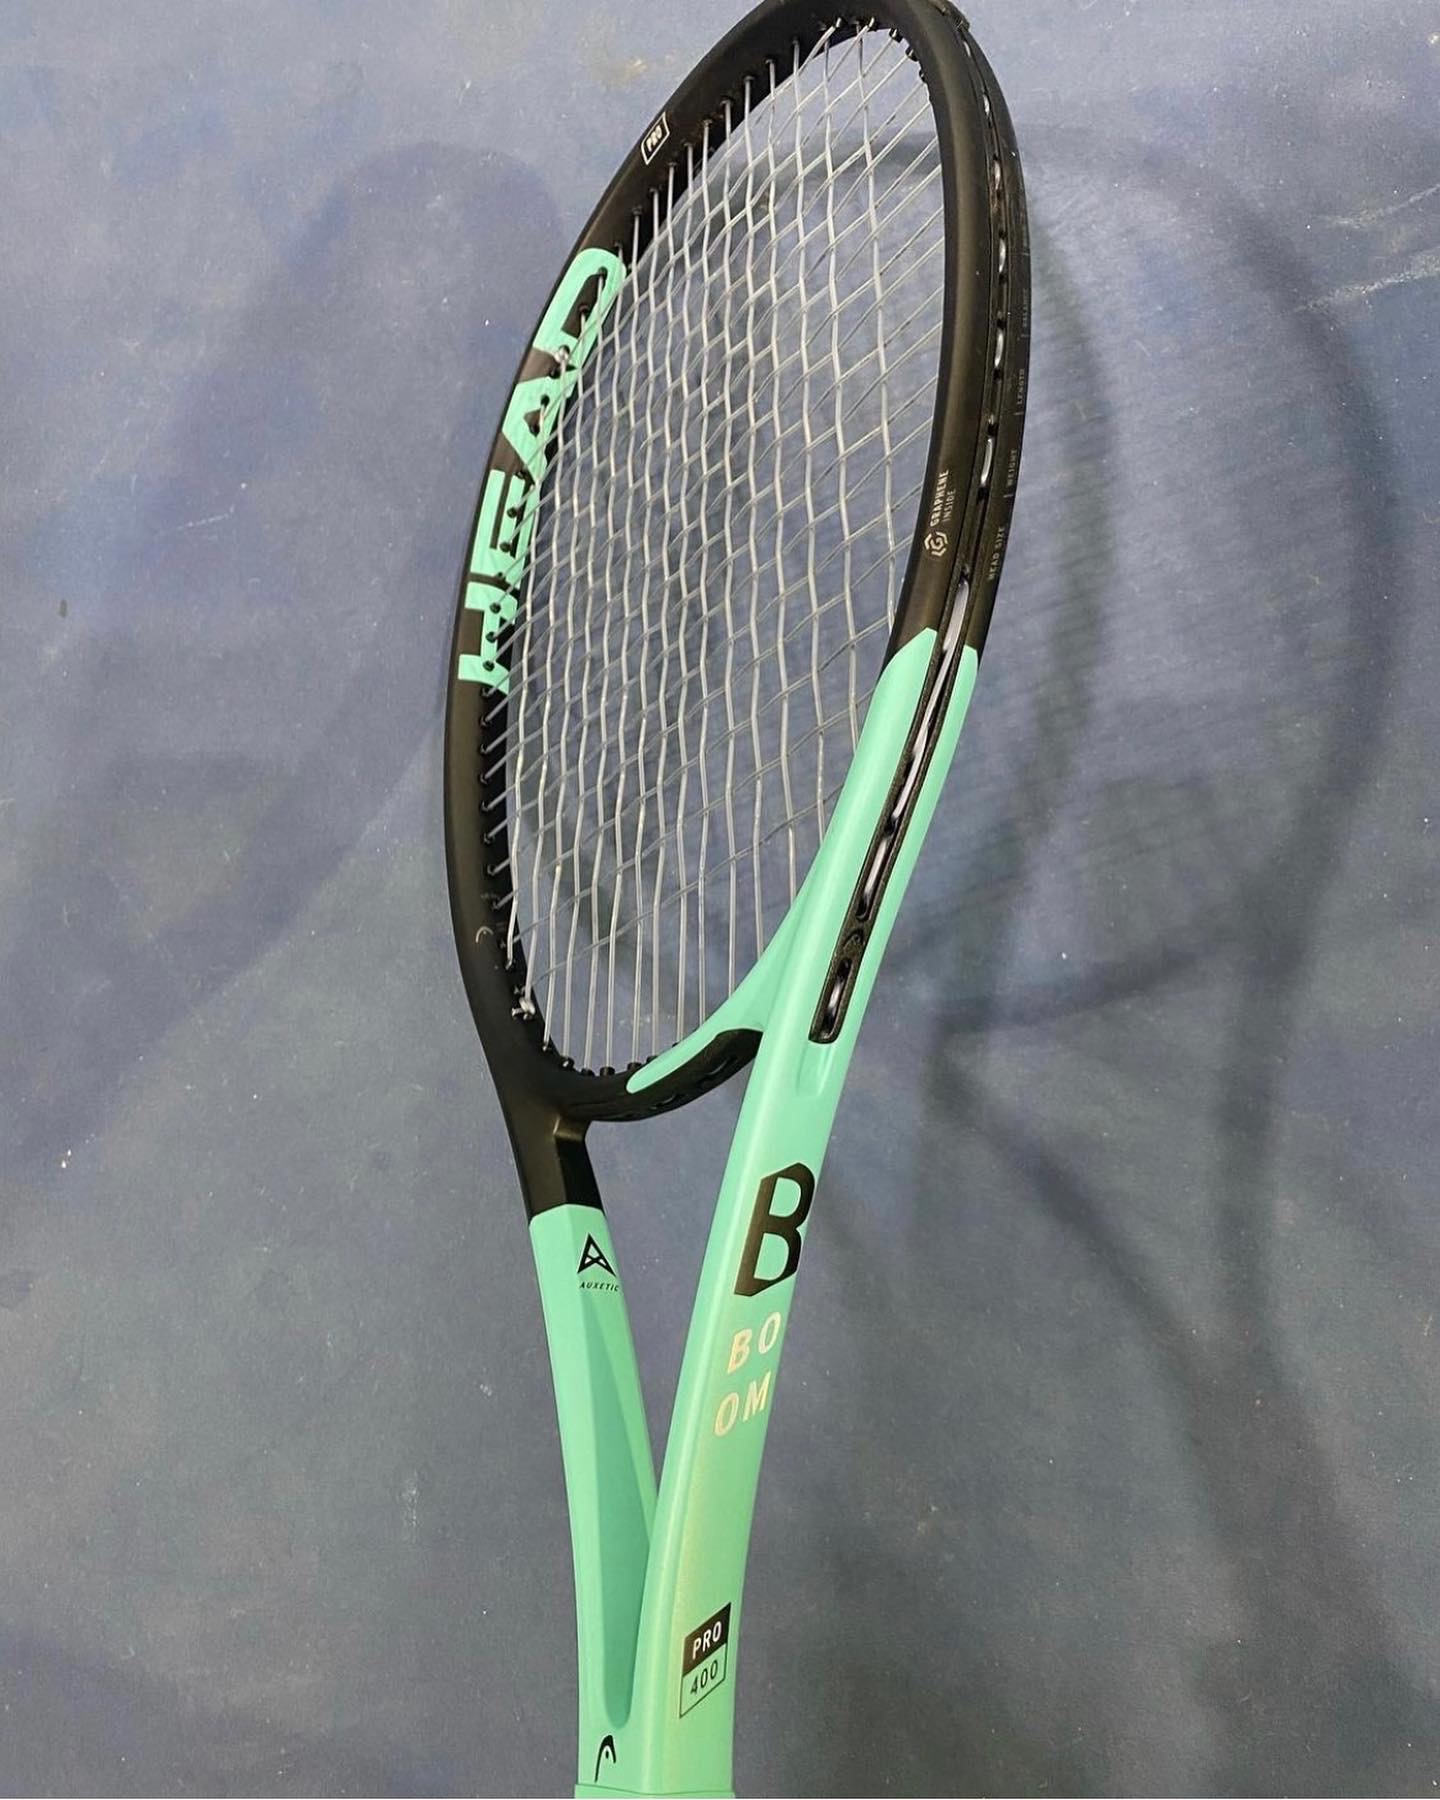 HEAD reveals their new racquet line BOOM